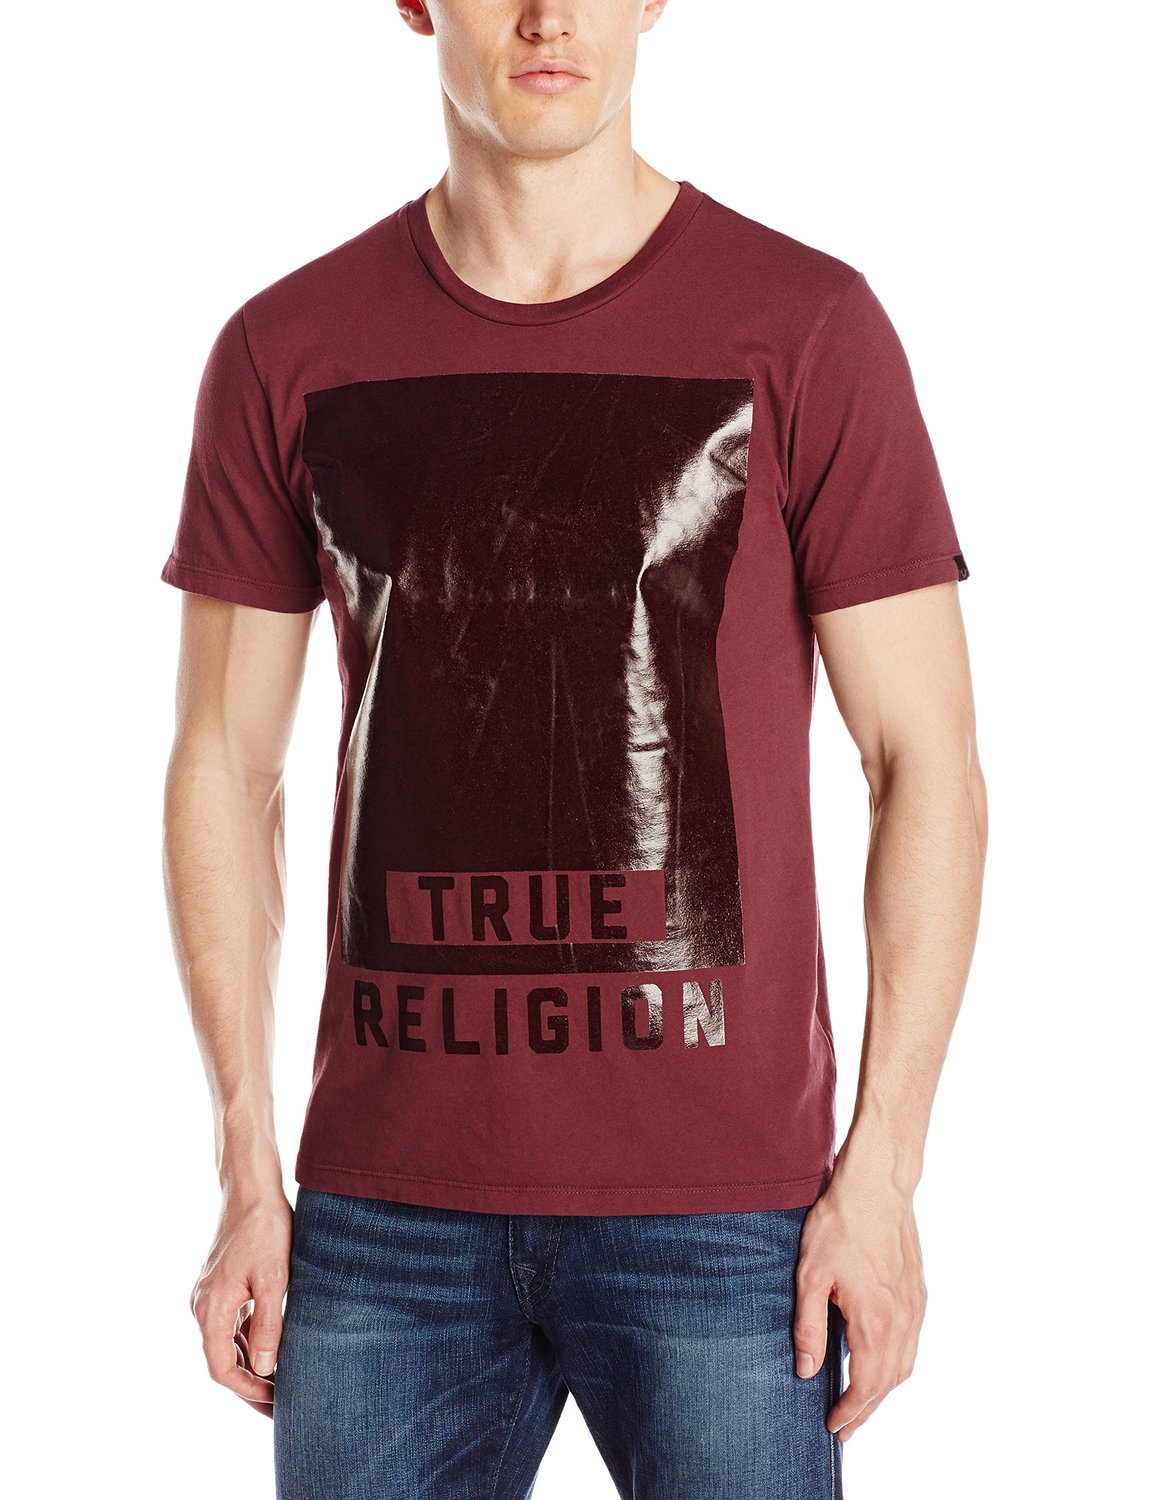 True Religion Mens T-Shirt - Mens Urban Clothing